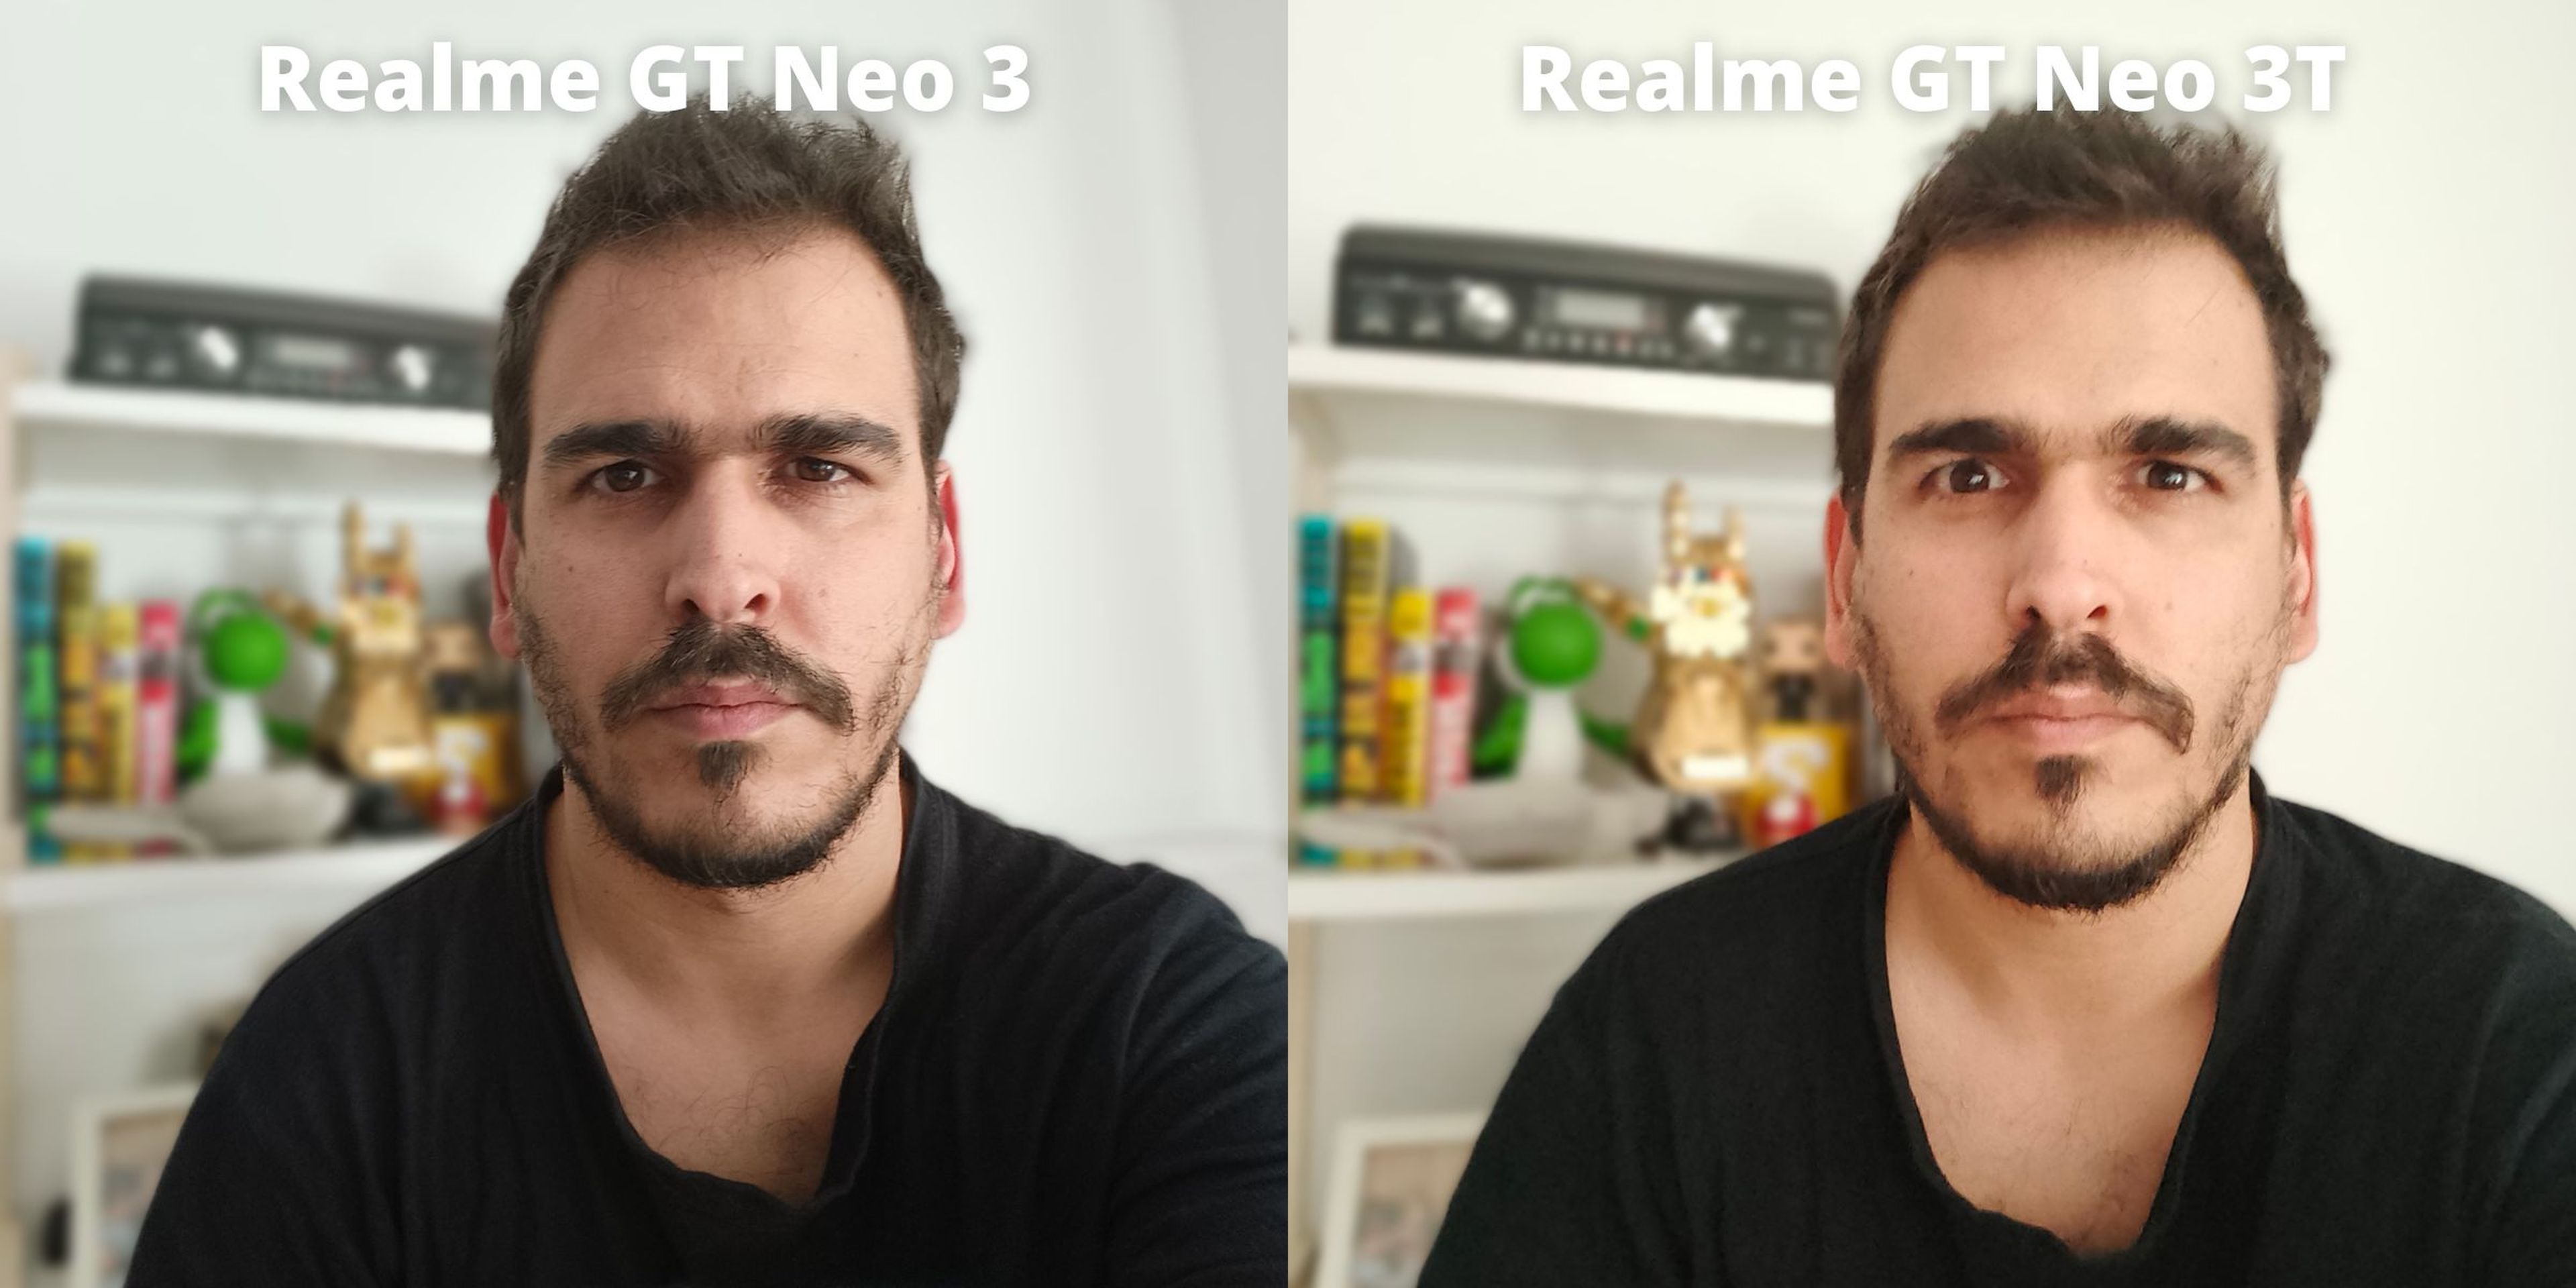 Realme GT Neo 3 vs Realme GT Neo 3T